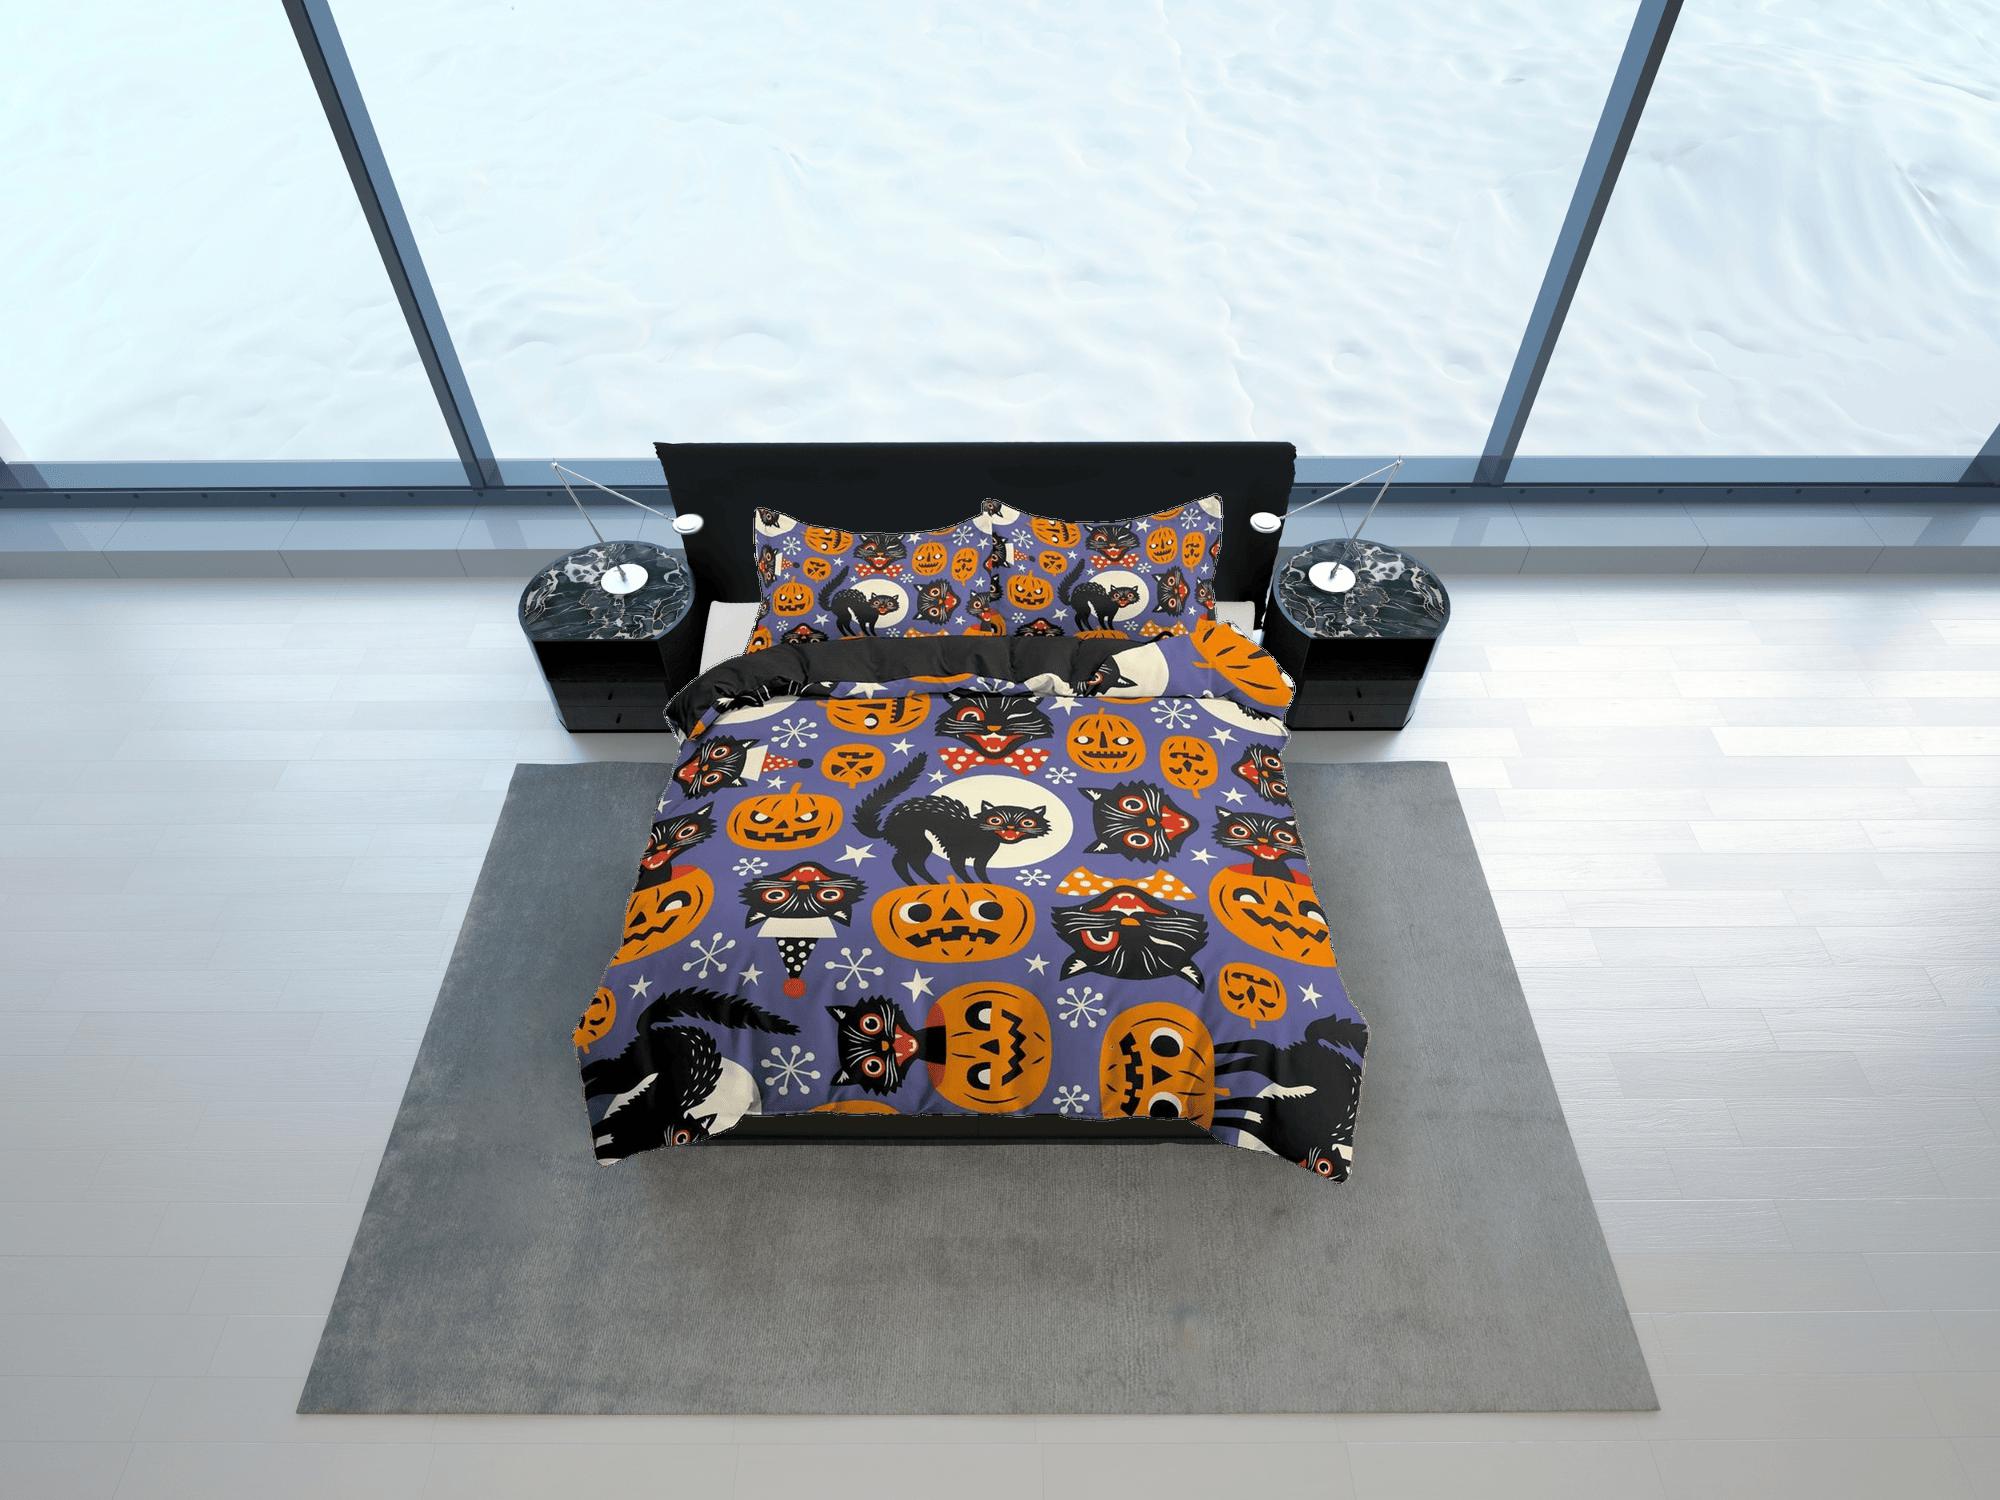 daintyduvet Black cat and pumpkin halloween bedding & pillowcase, periwinkle purple duvet cover set dorm bedding, nursery toddler bedding halloween gift